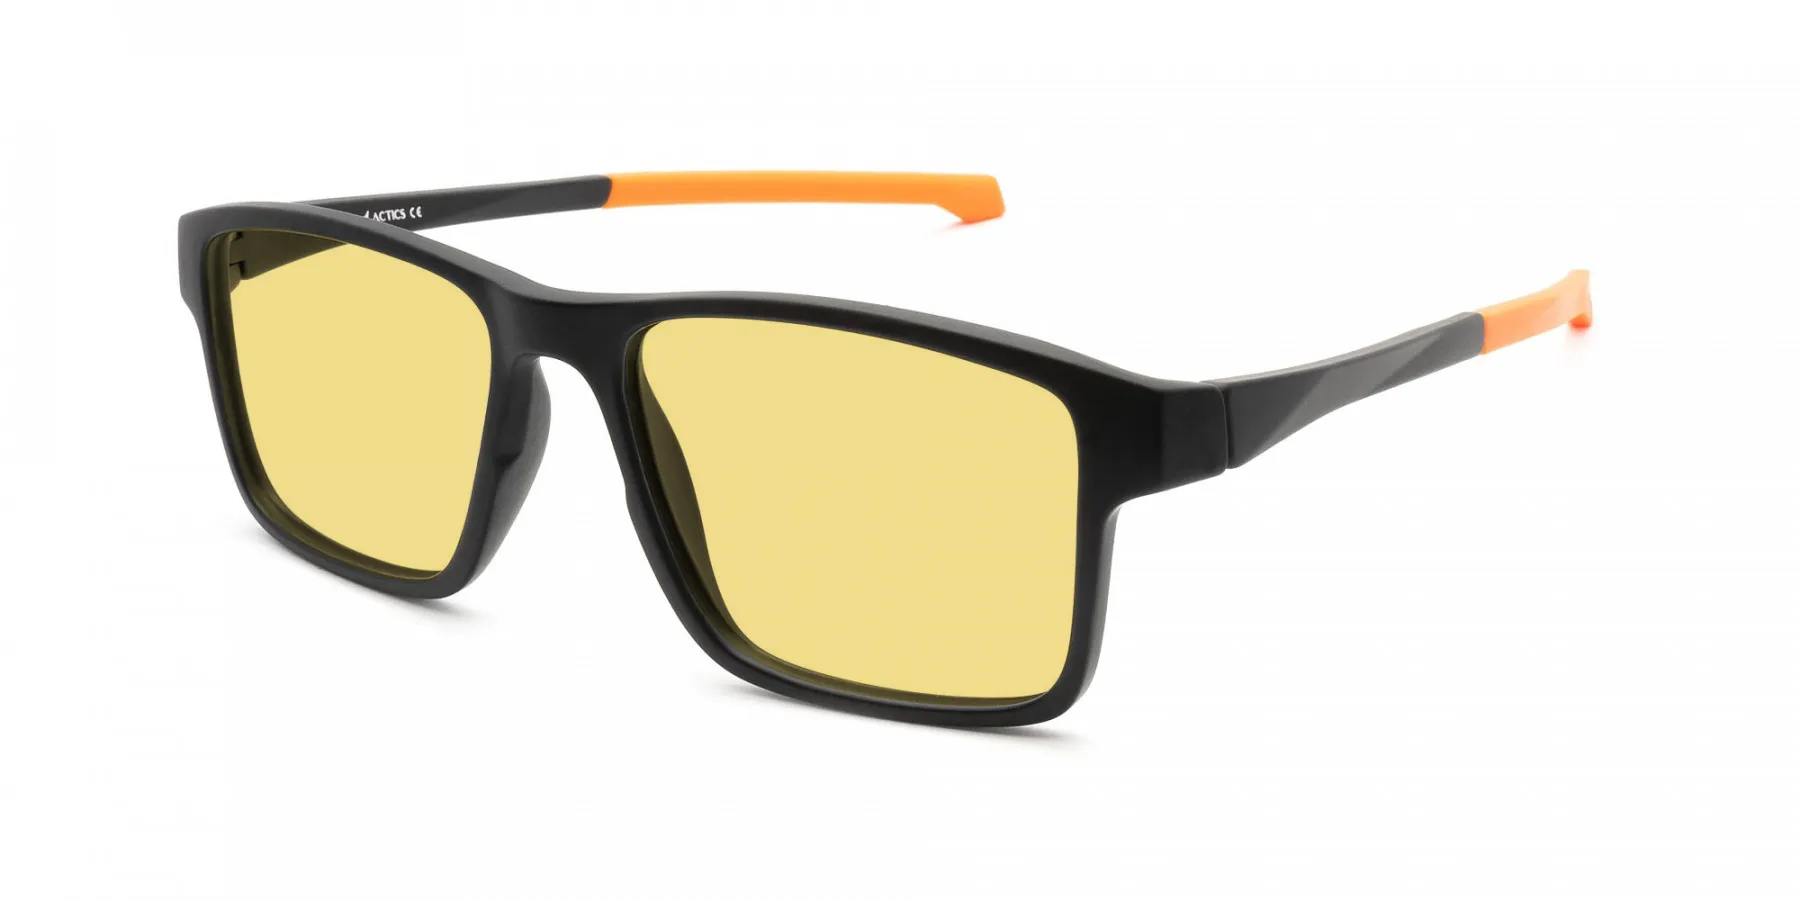 Rectangular Sports Sunglasses With Yellow Tint